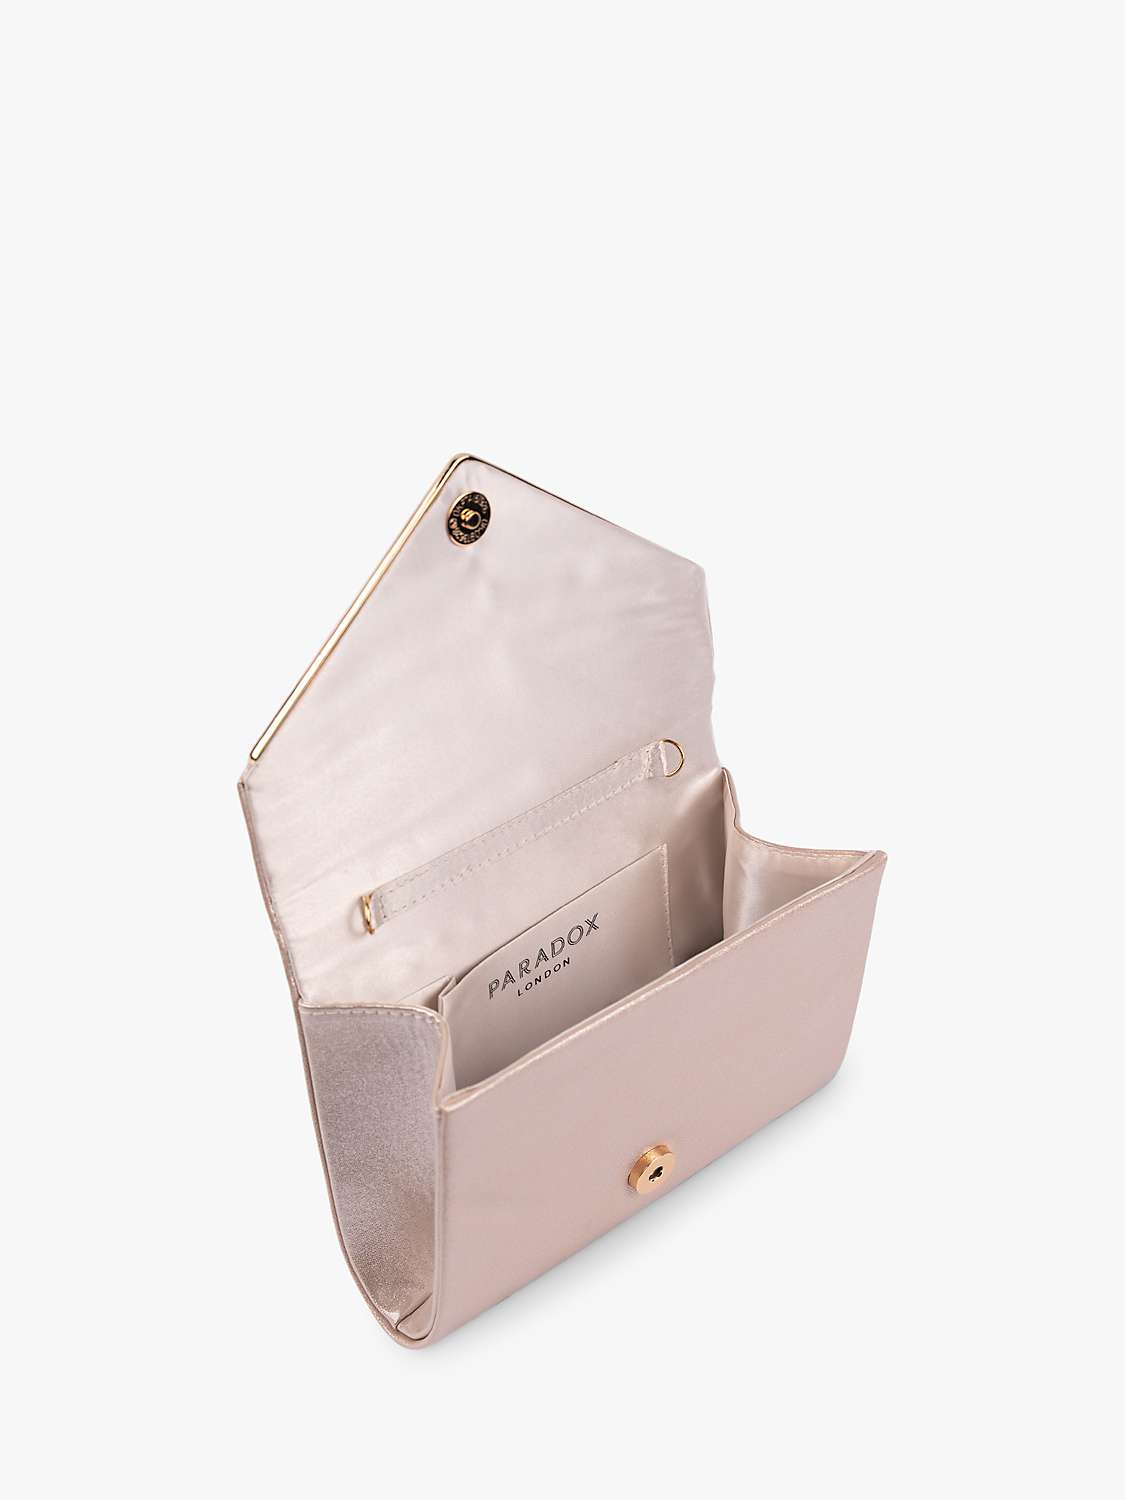 Buy Paradox London Darcy Envelope Clutch Bag, Nude Online at johnlewis.com